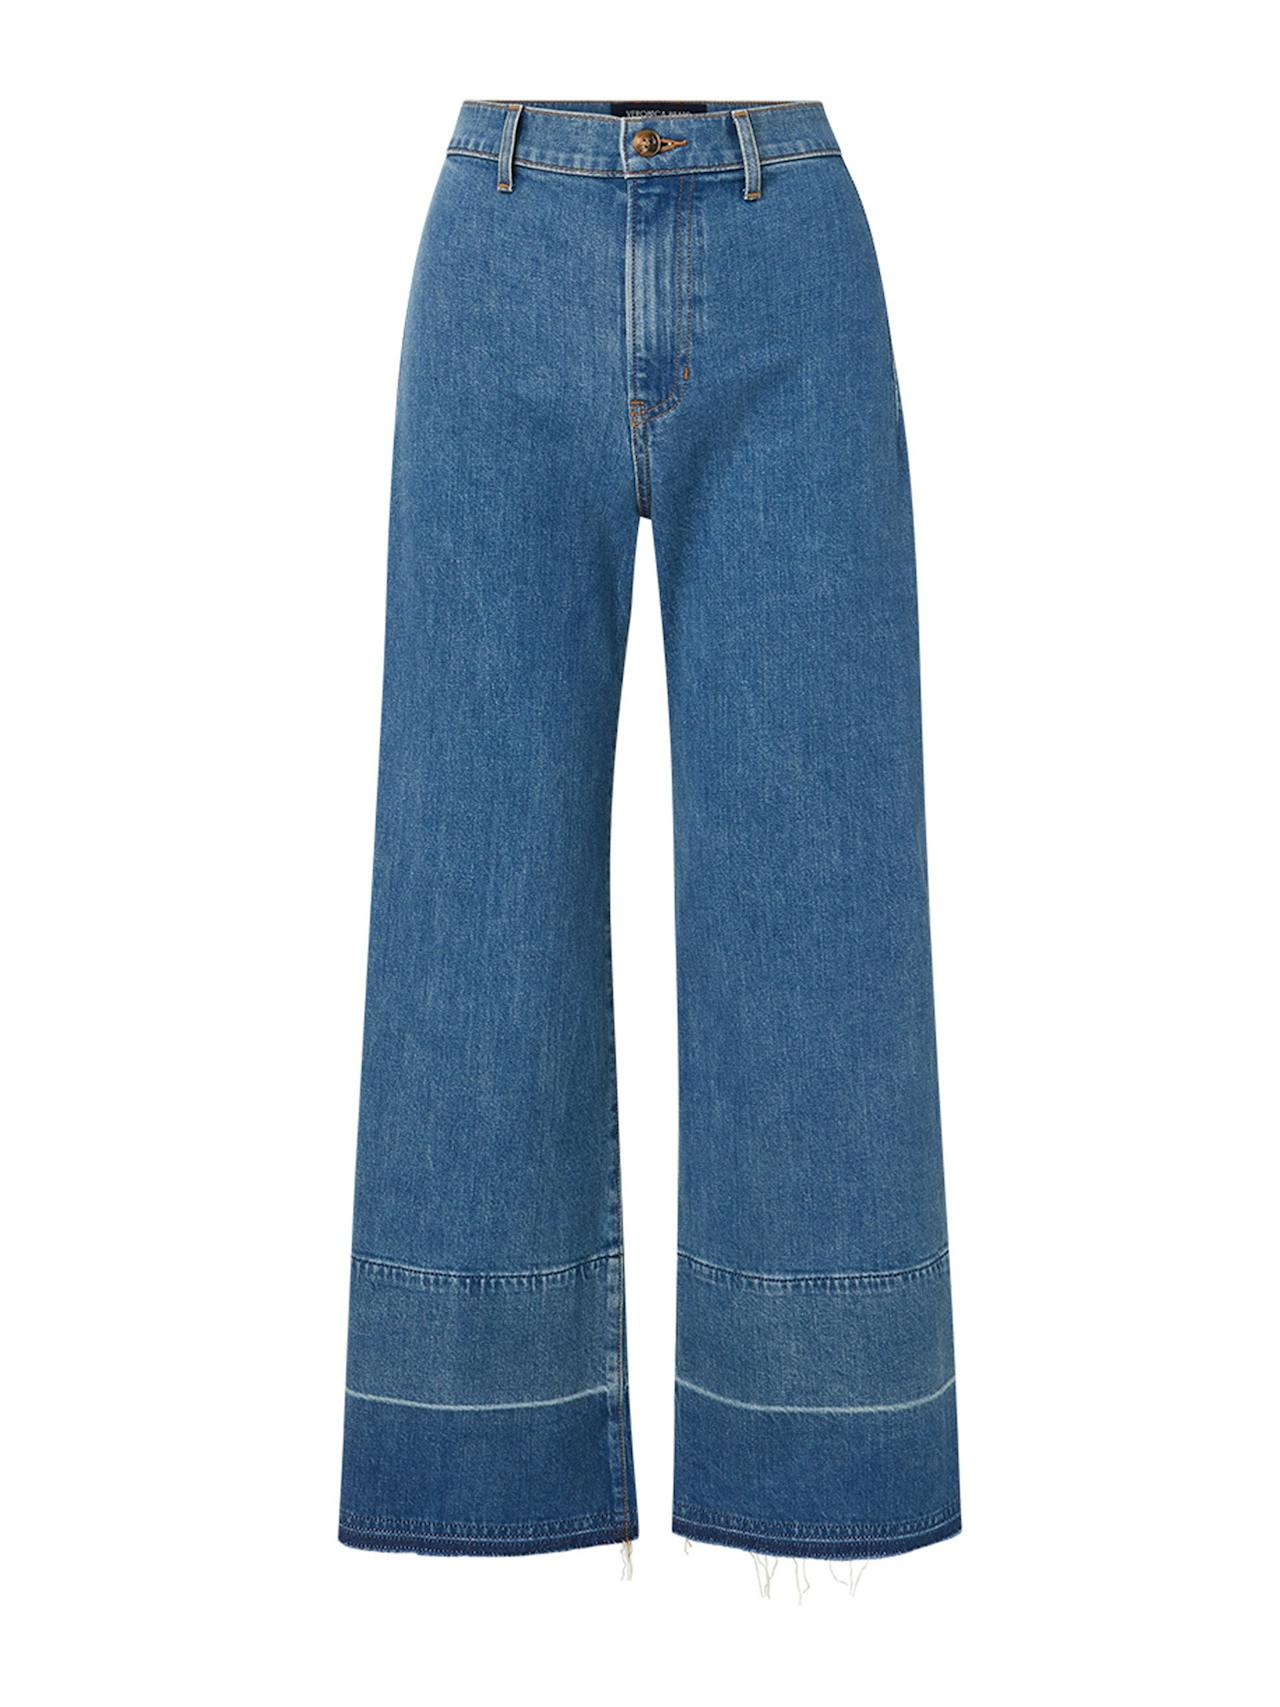 Grant wide-leg crop jeans